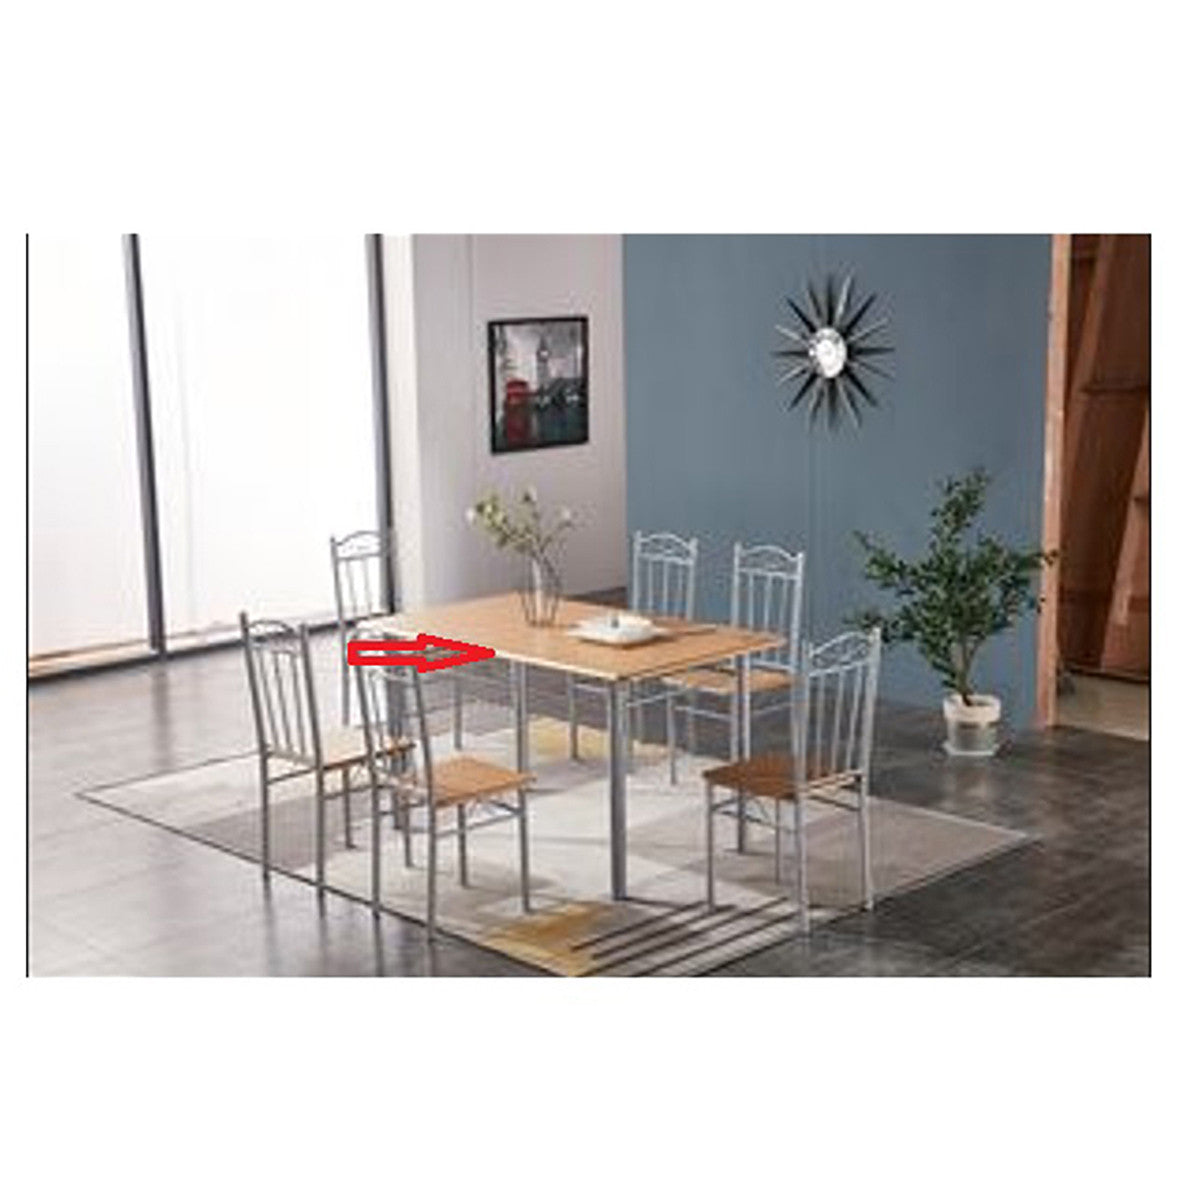 Zz-tavolo completo x set tavolo c/6 sedie(140x80) legno chiaro